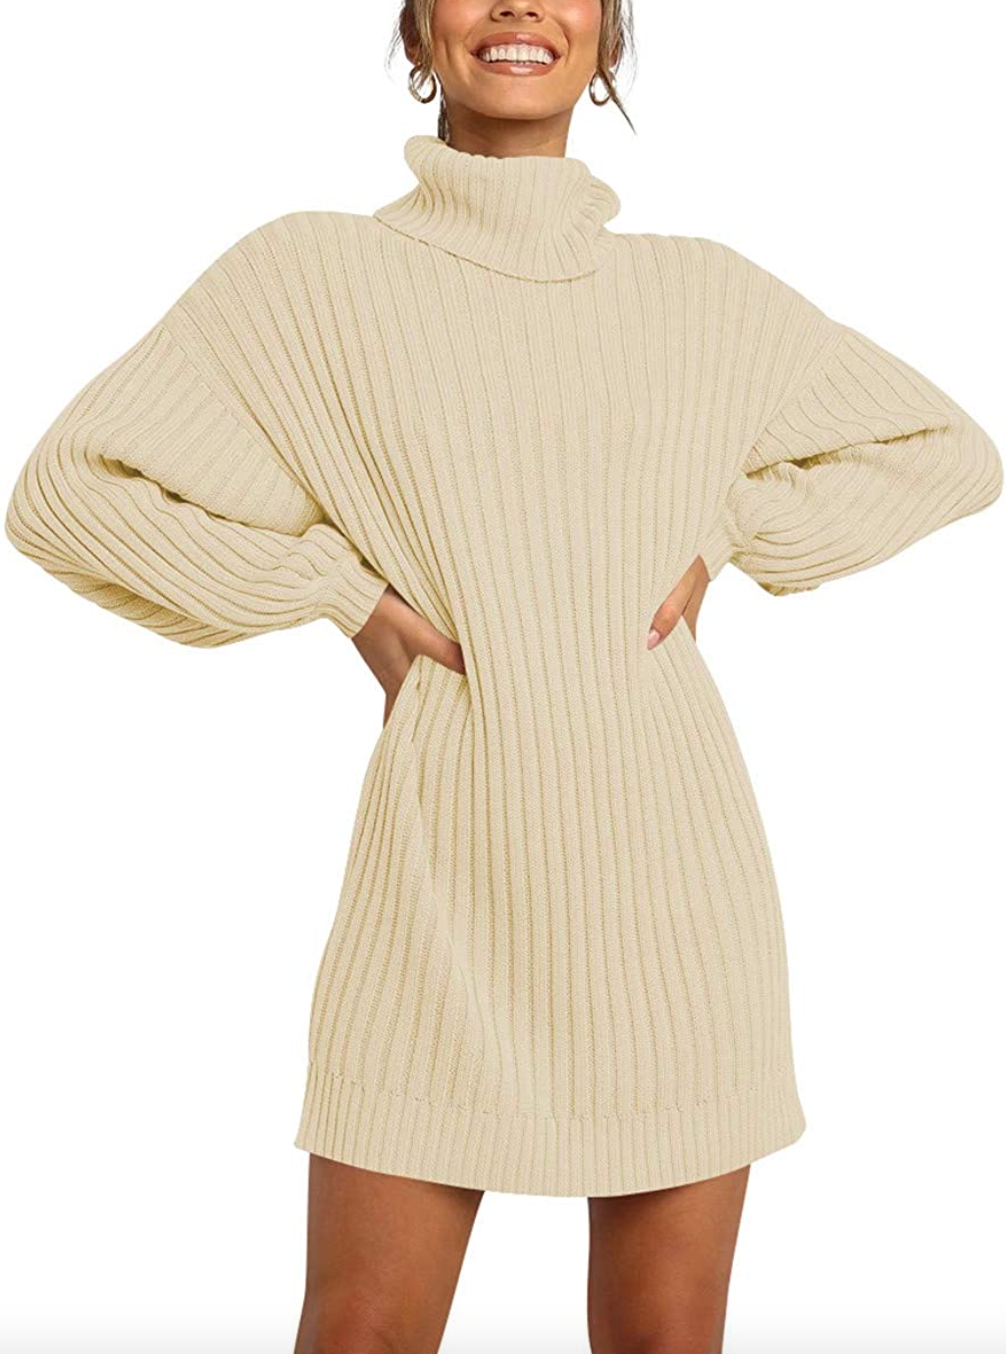 Prinbara Turtleneck Oversized Sweater Dress